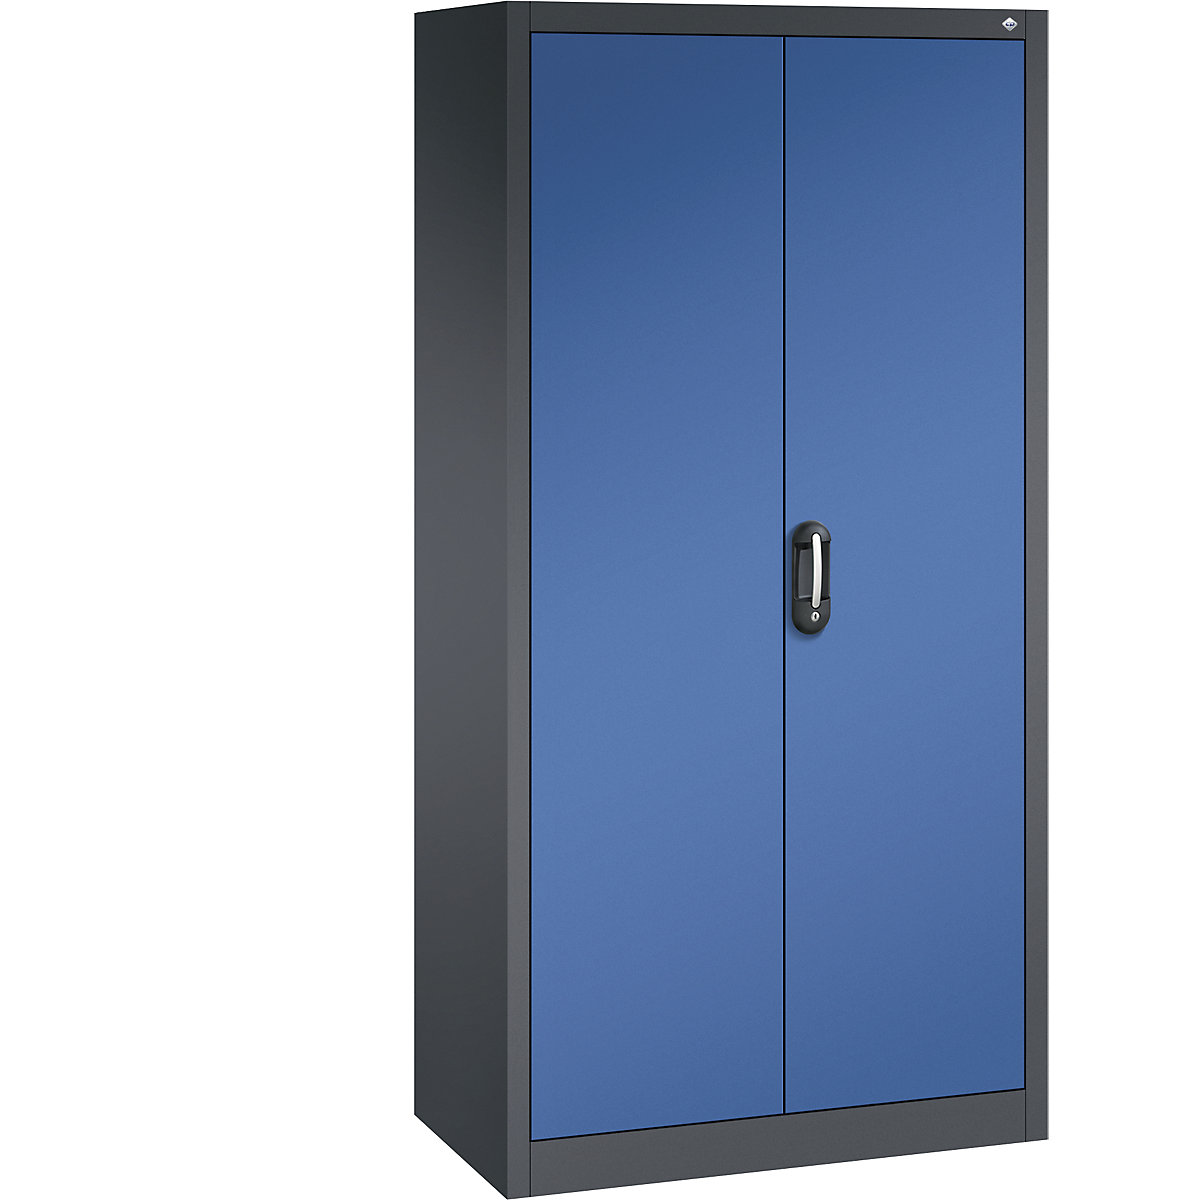 ACURADO universal cupboard – C+P, WxD 930 x 500 mm, black grey / gentian blue-23